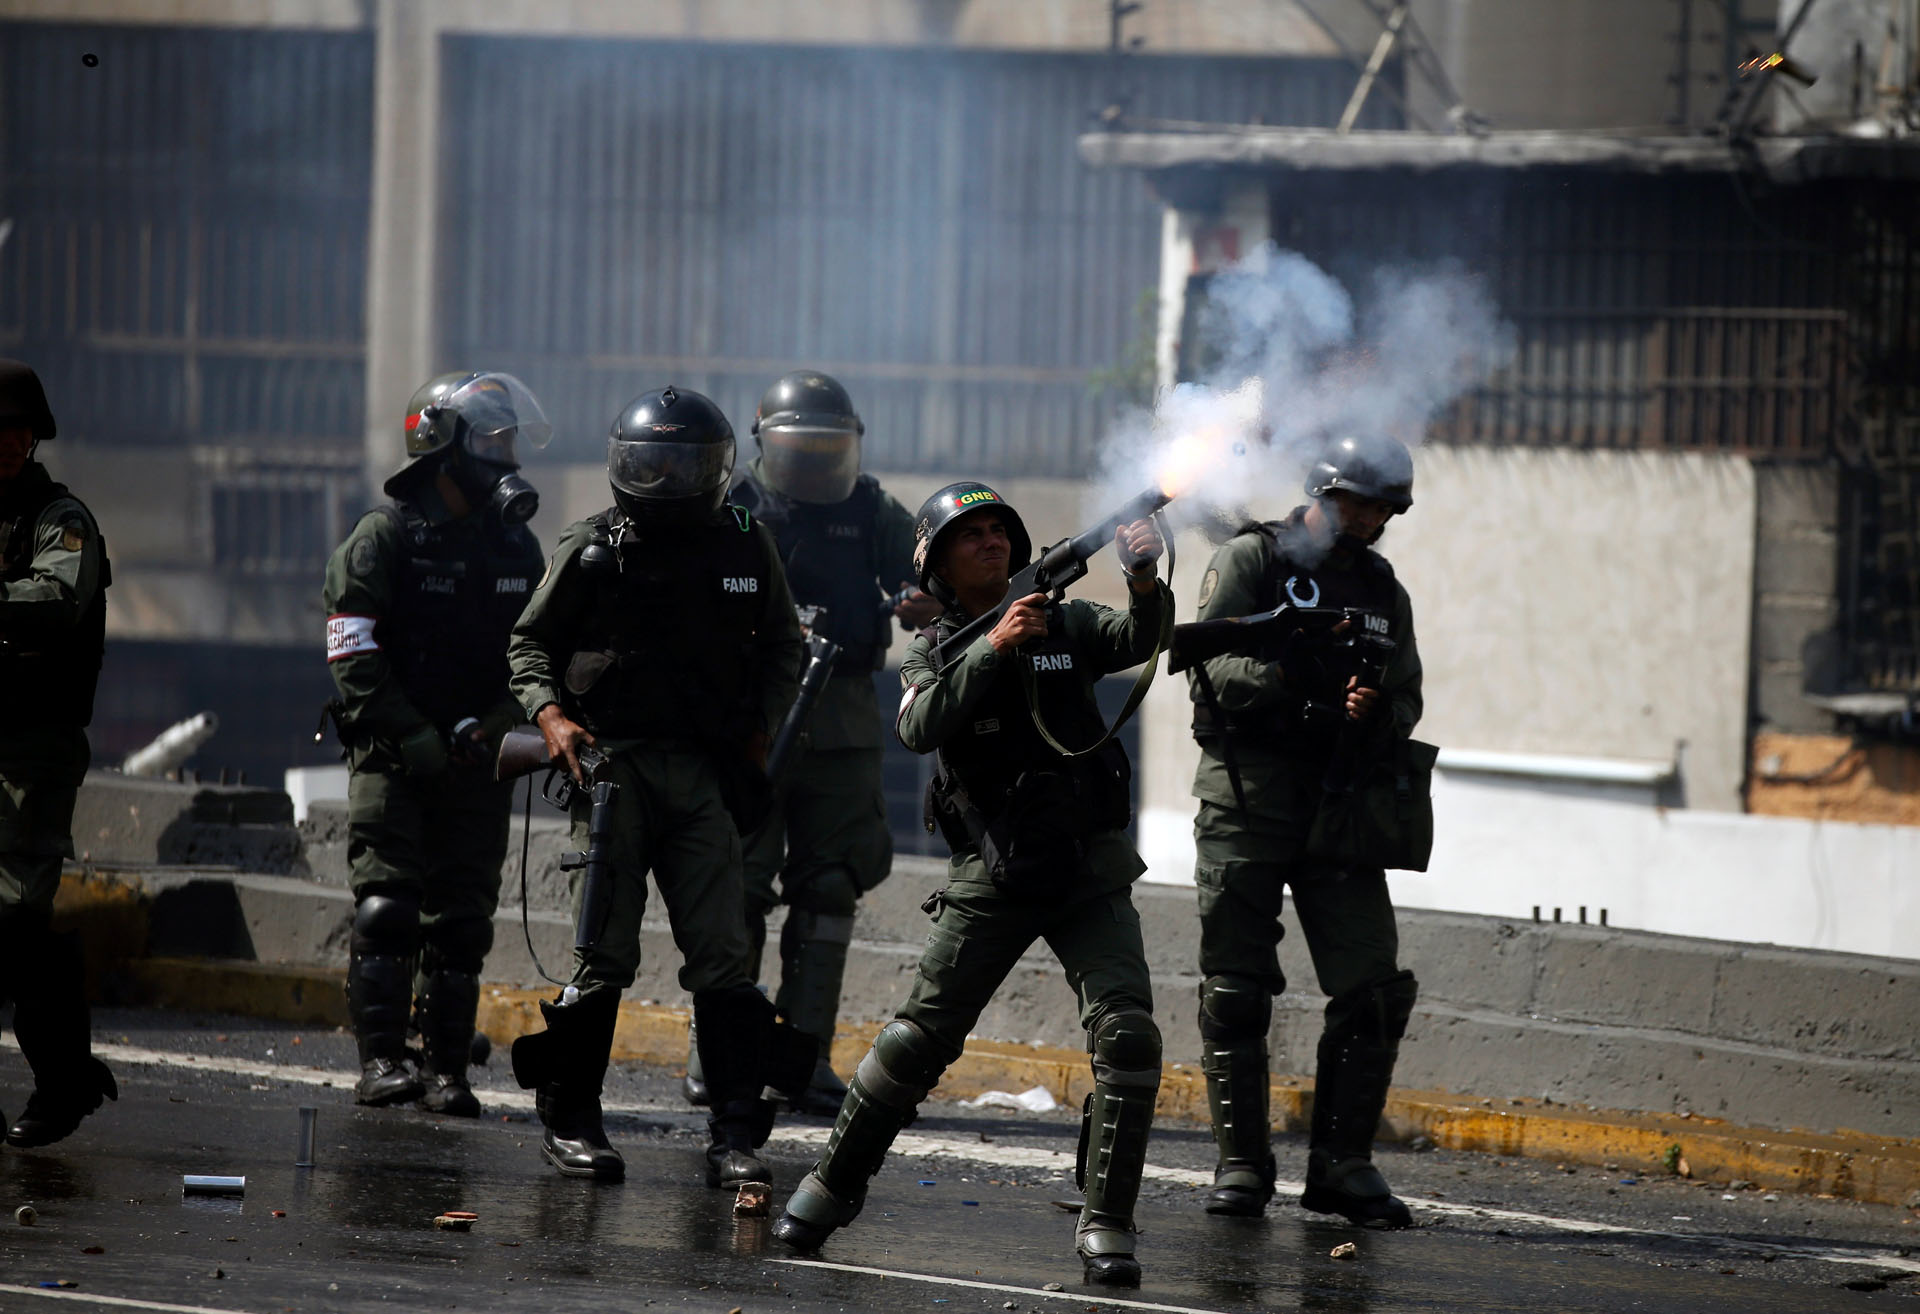 A Venezuelan national guard shoots tear gas during an opposition rally in Caracas, Venezuela, April 6, 2017. REUTERS/Carlos Garcia Rawlins